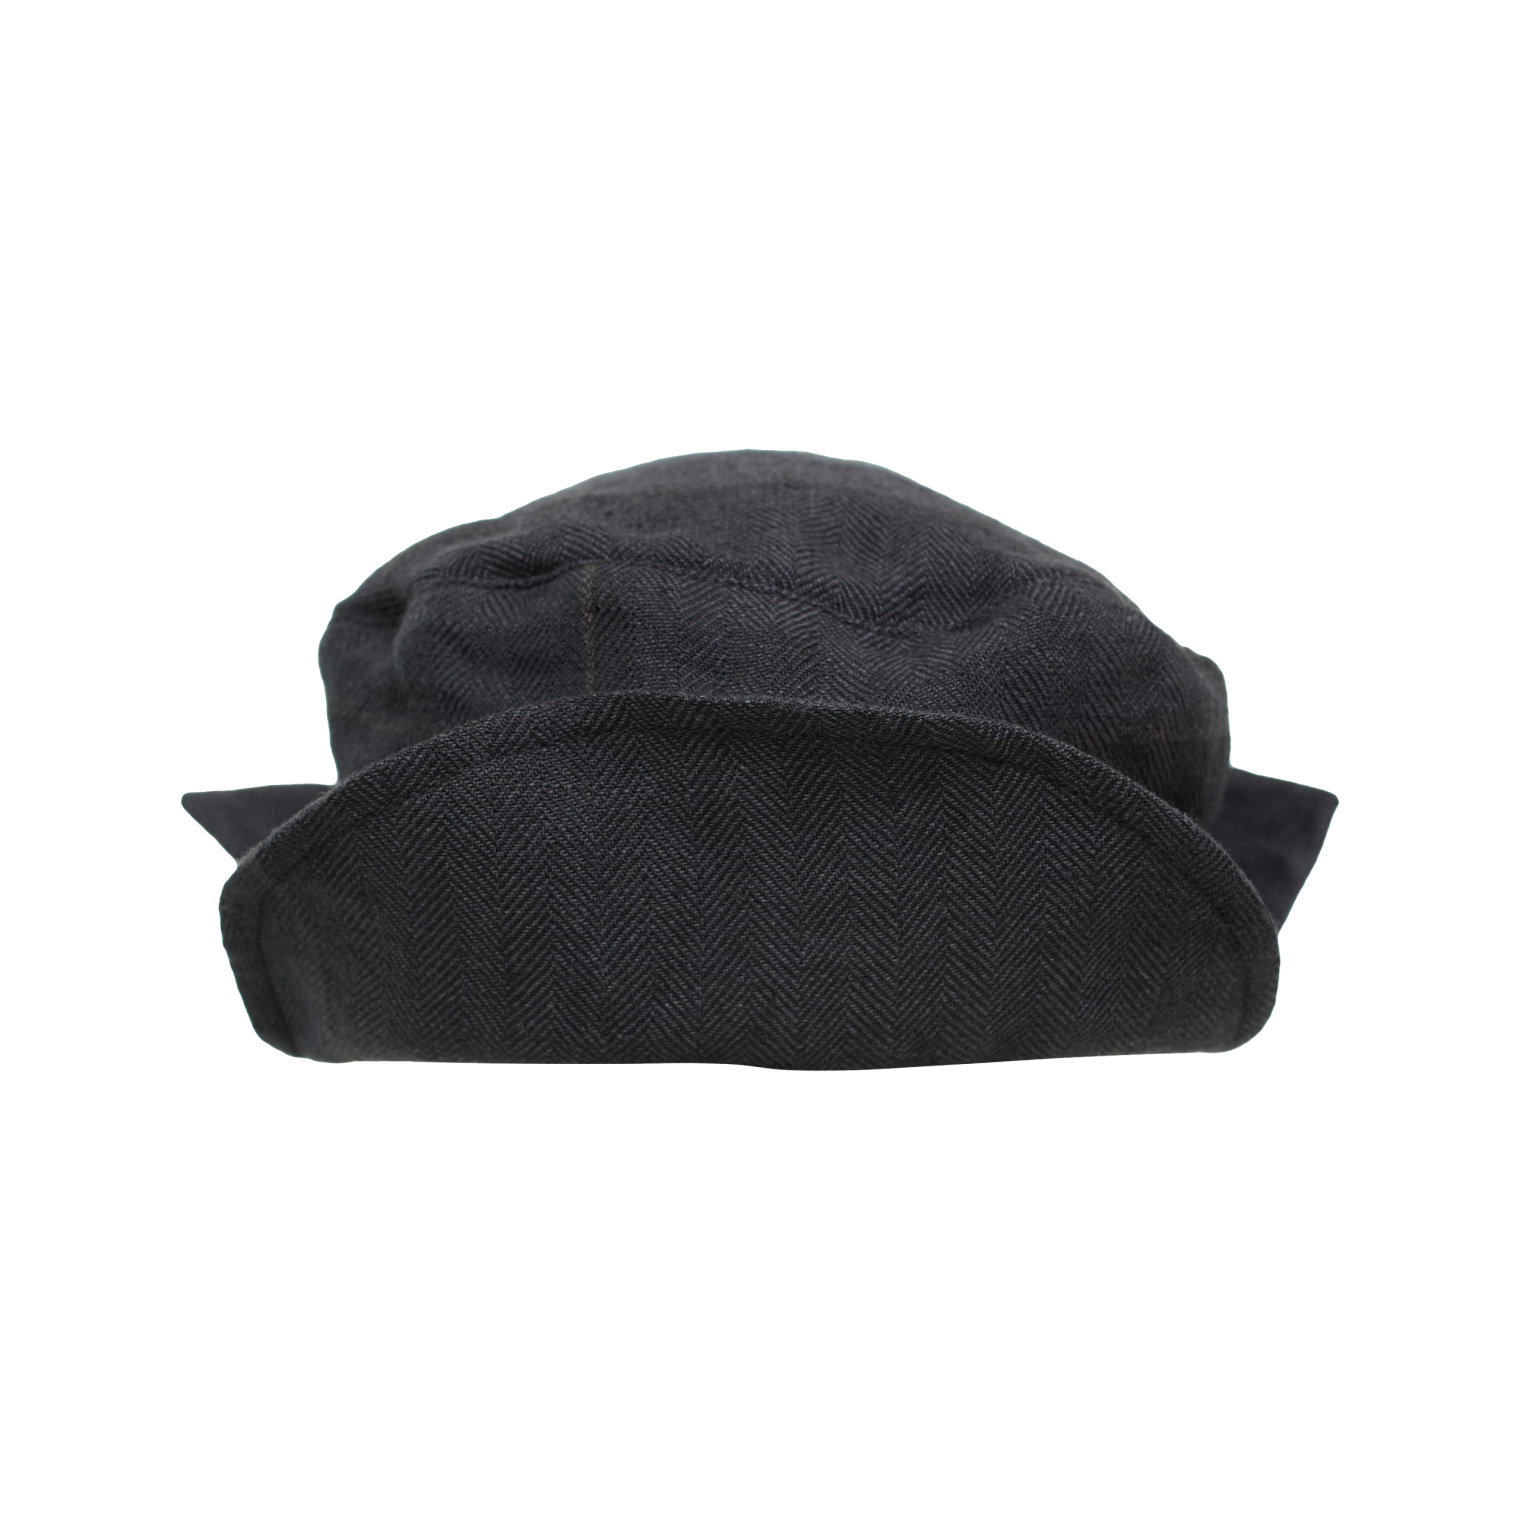 The Viridi-Anne Black check linen cap